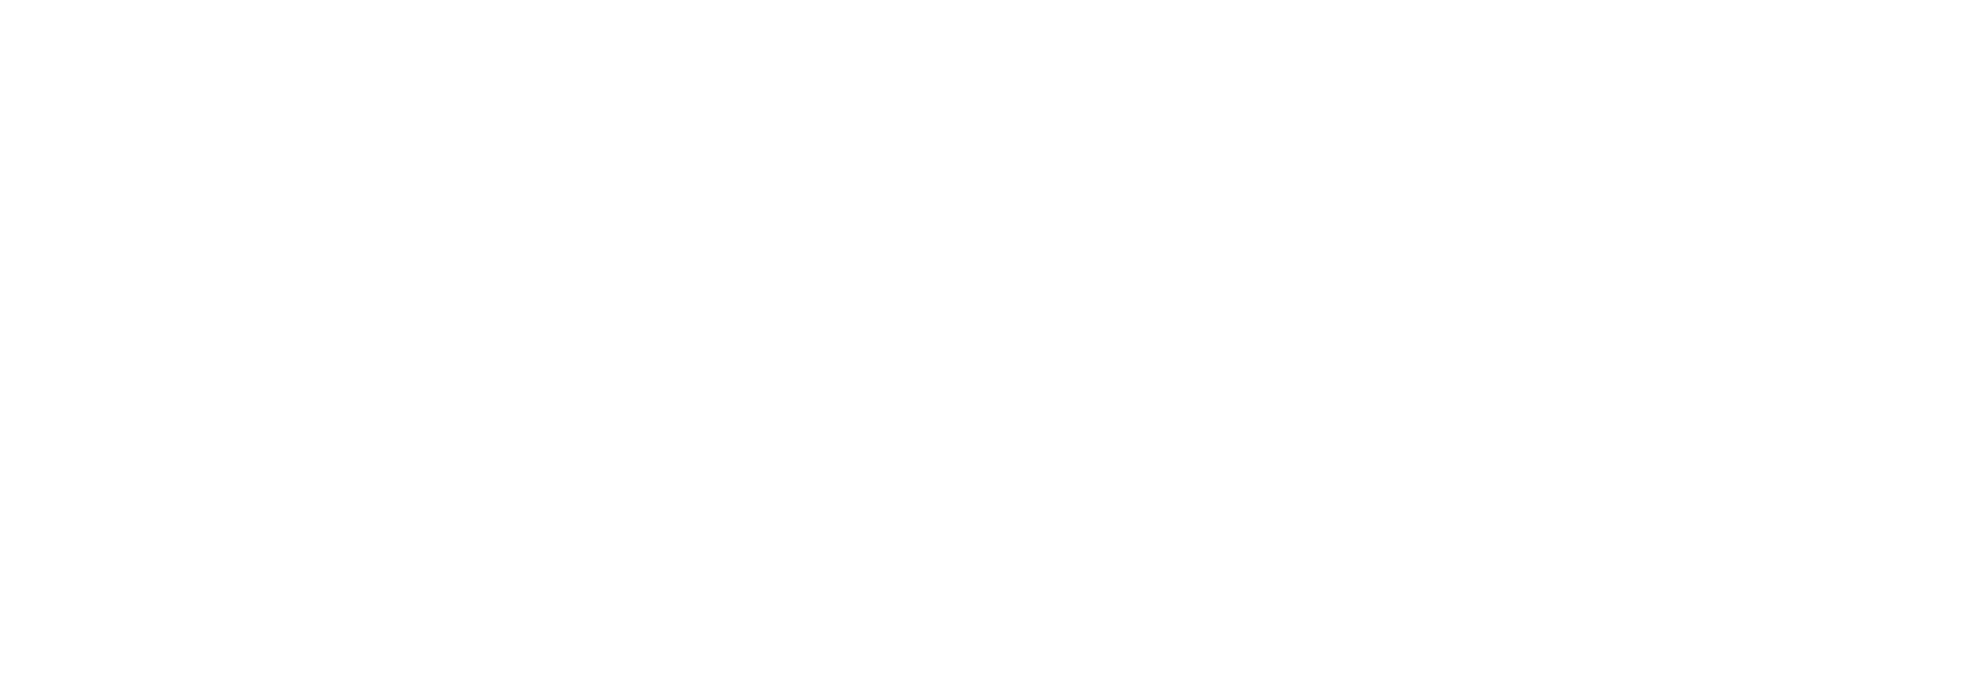 dararath.com